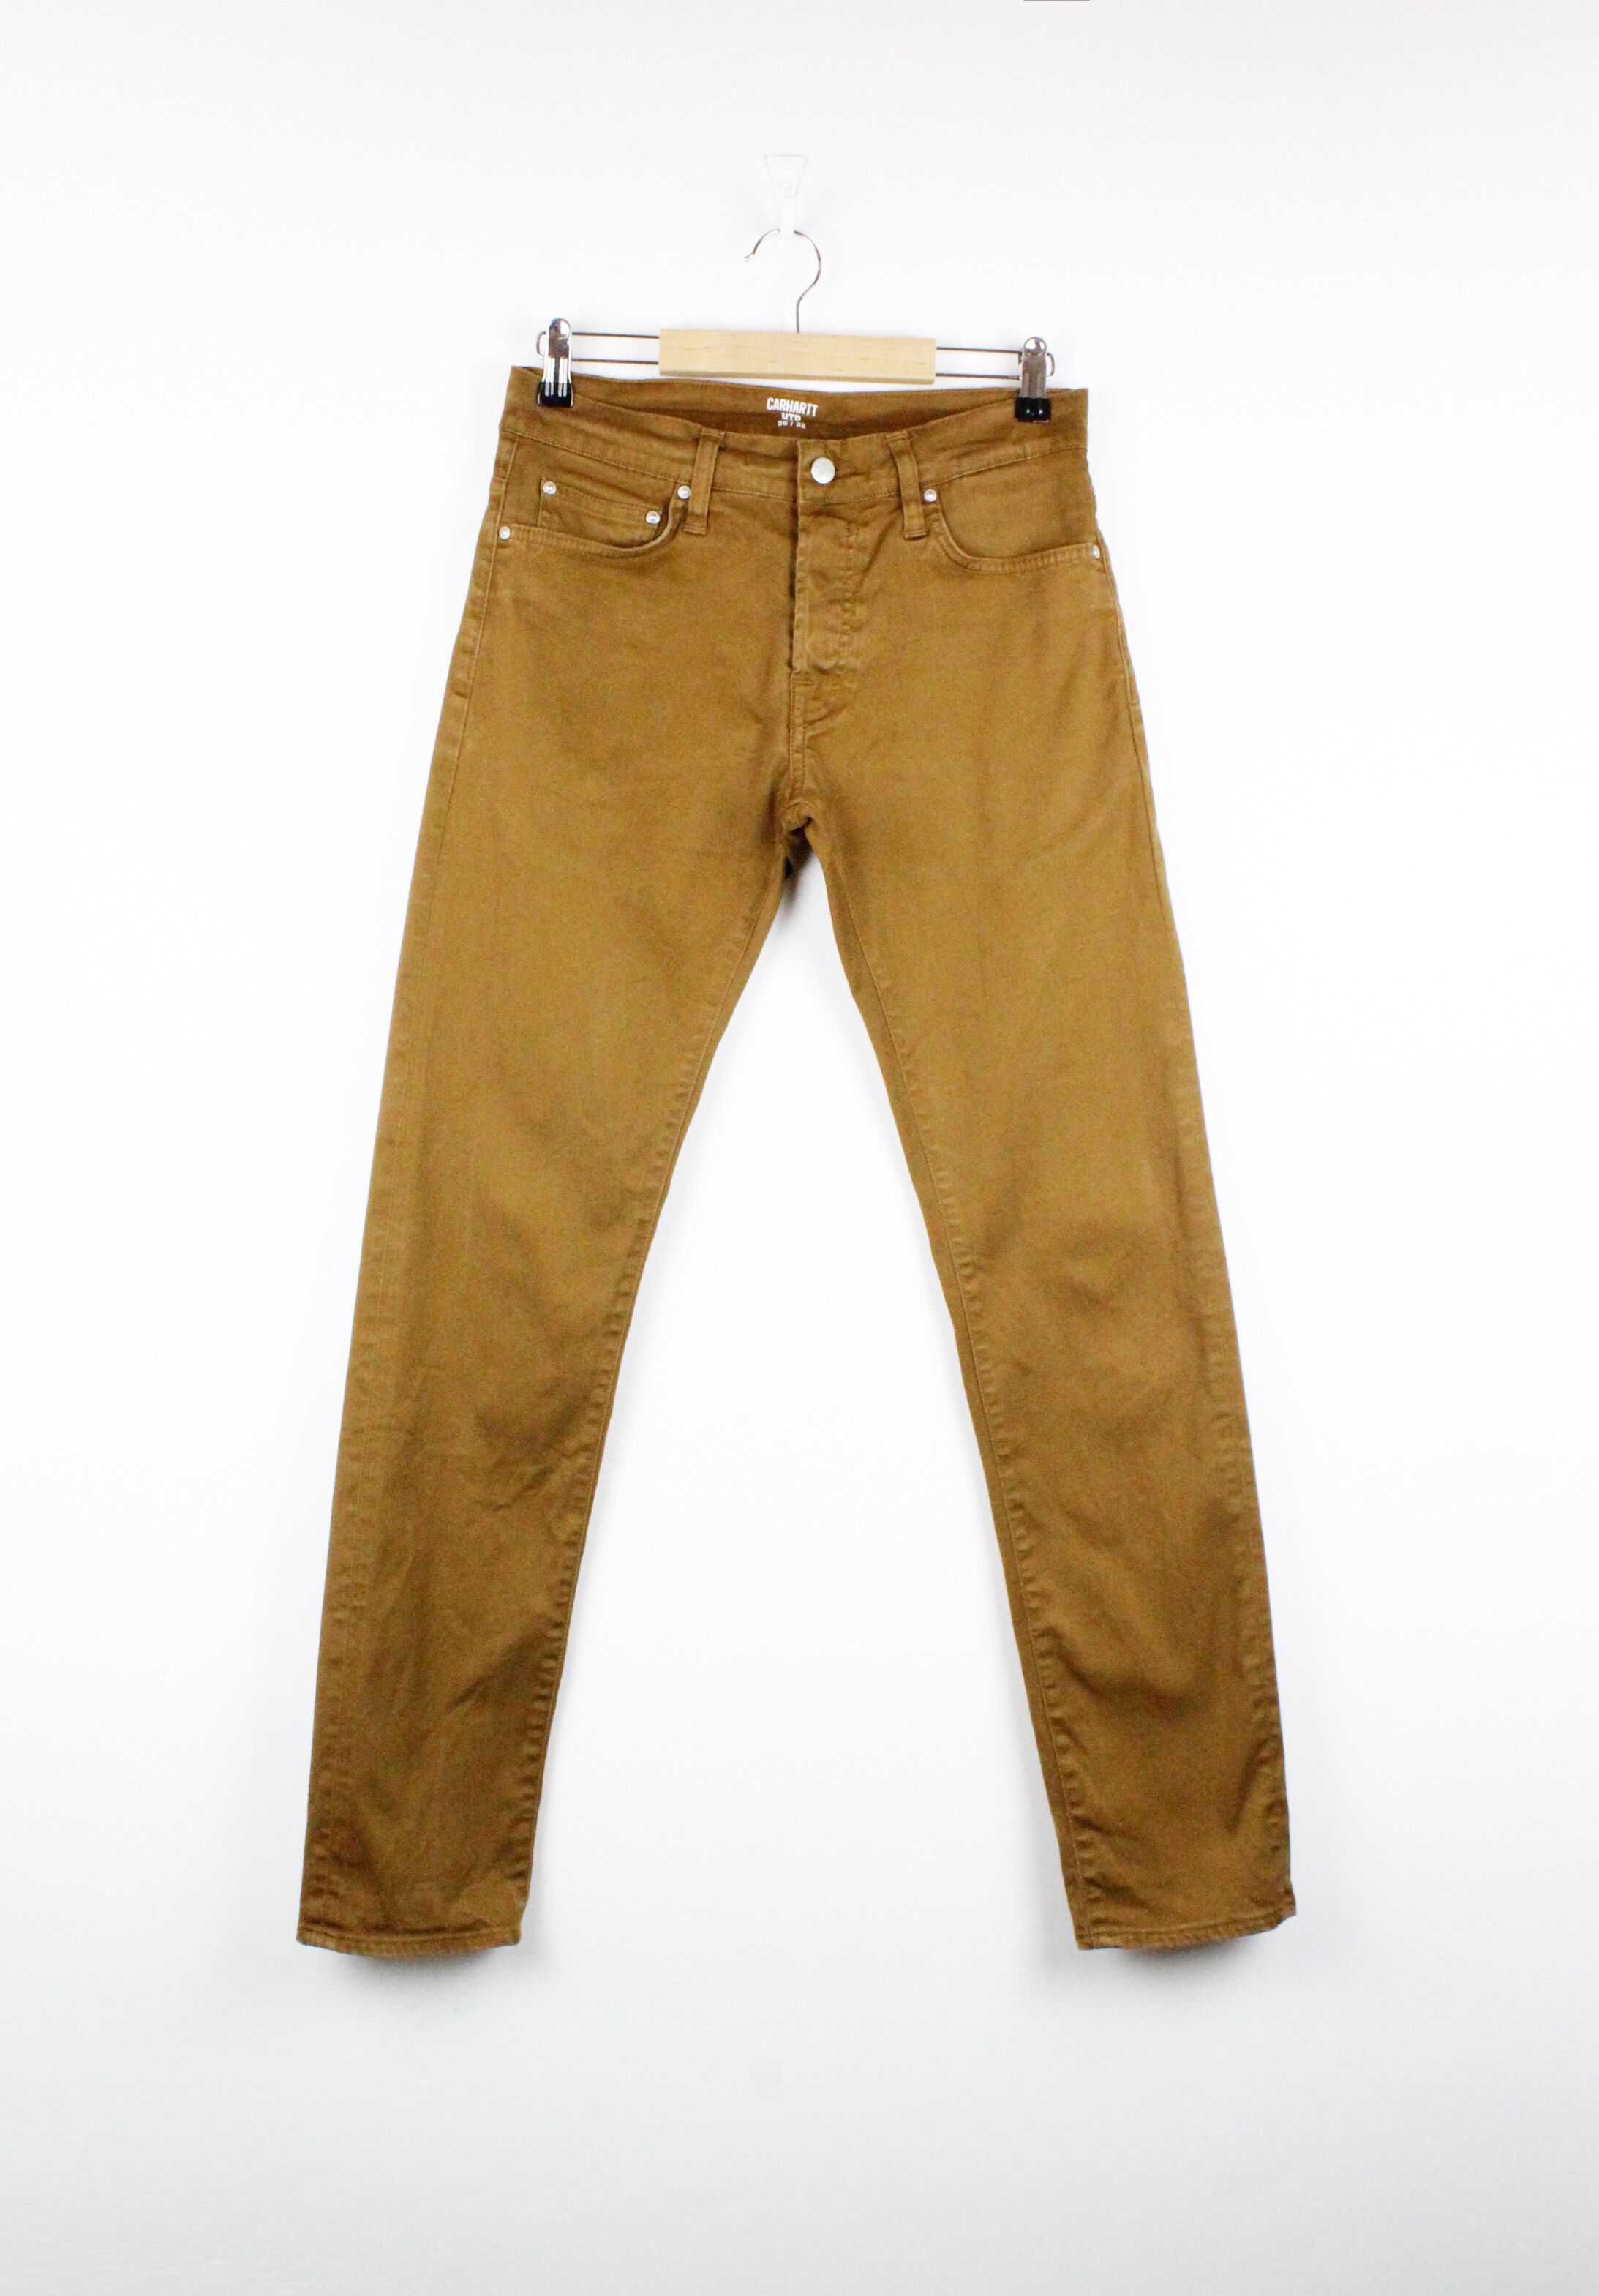 Carhartt Carhartt WIP Jeans Leather Logo Brown Klondike Denim Pants ...